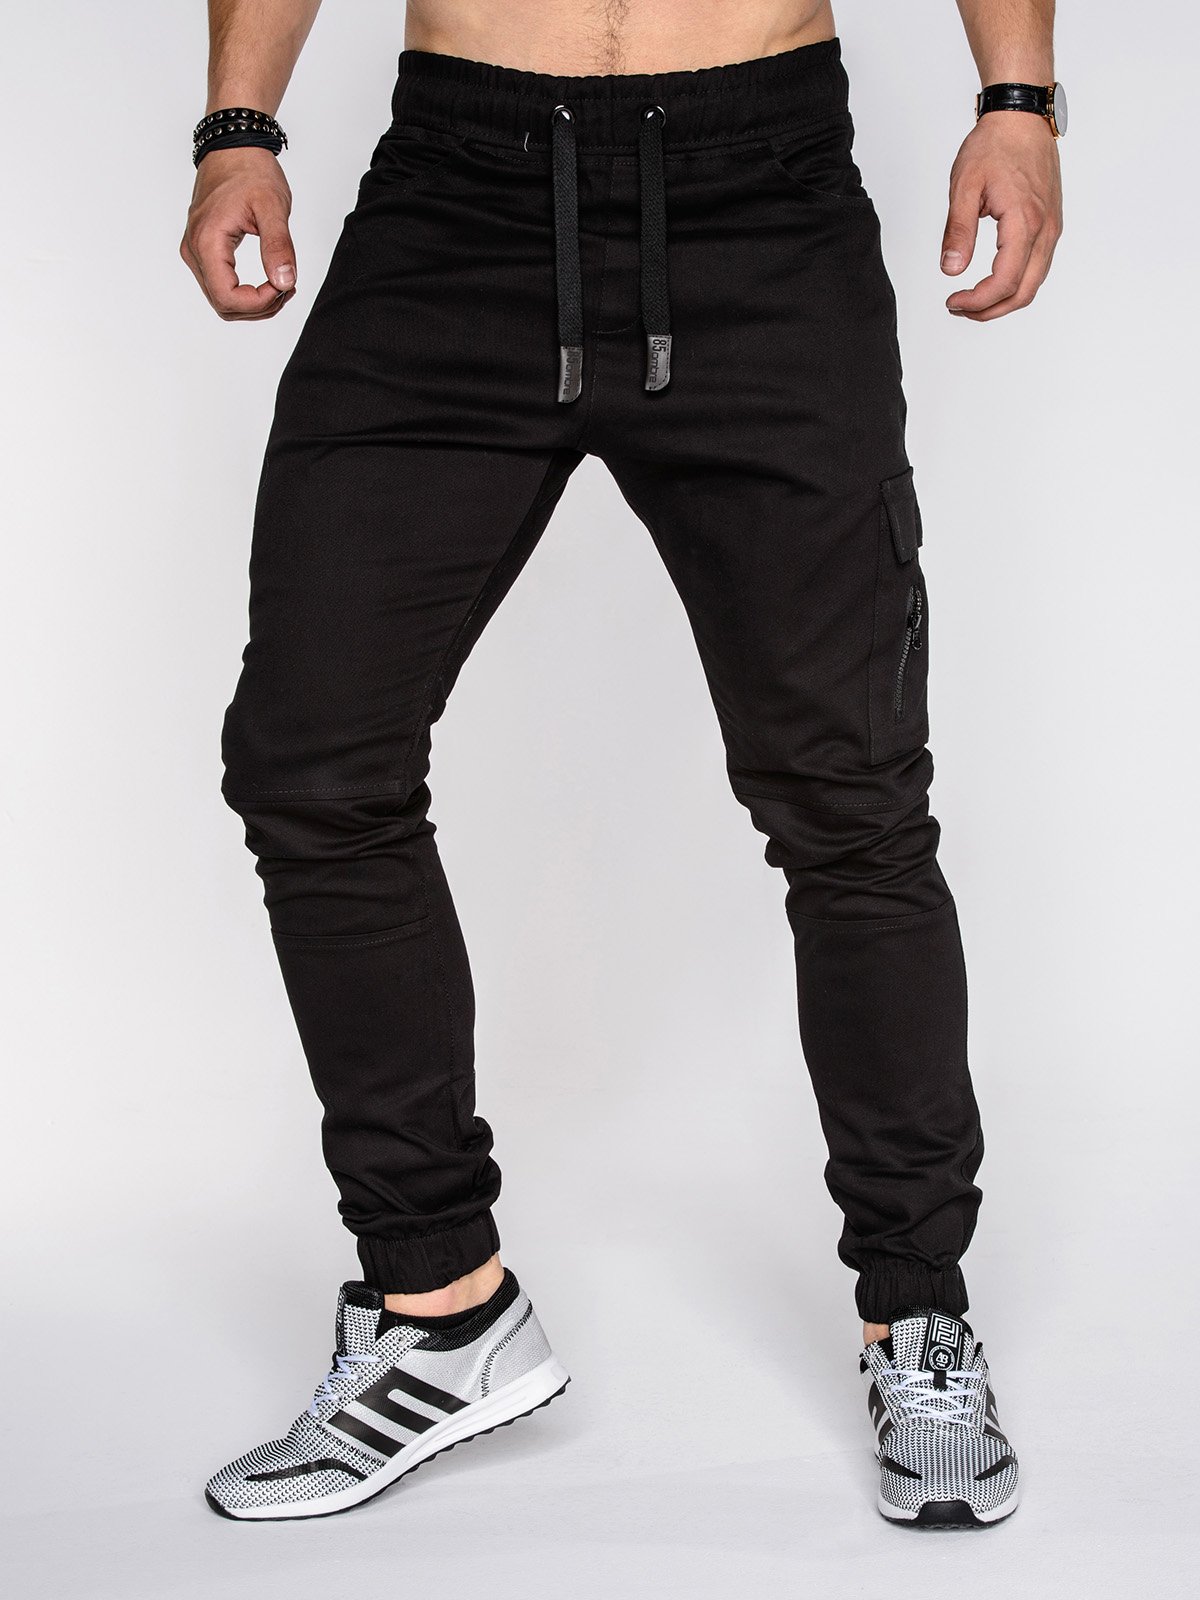 MEN'S JOGGER PANTS P391 - BLACK | MODONE wholesale - Clothing For Men